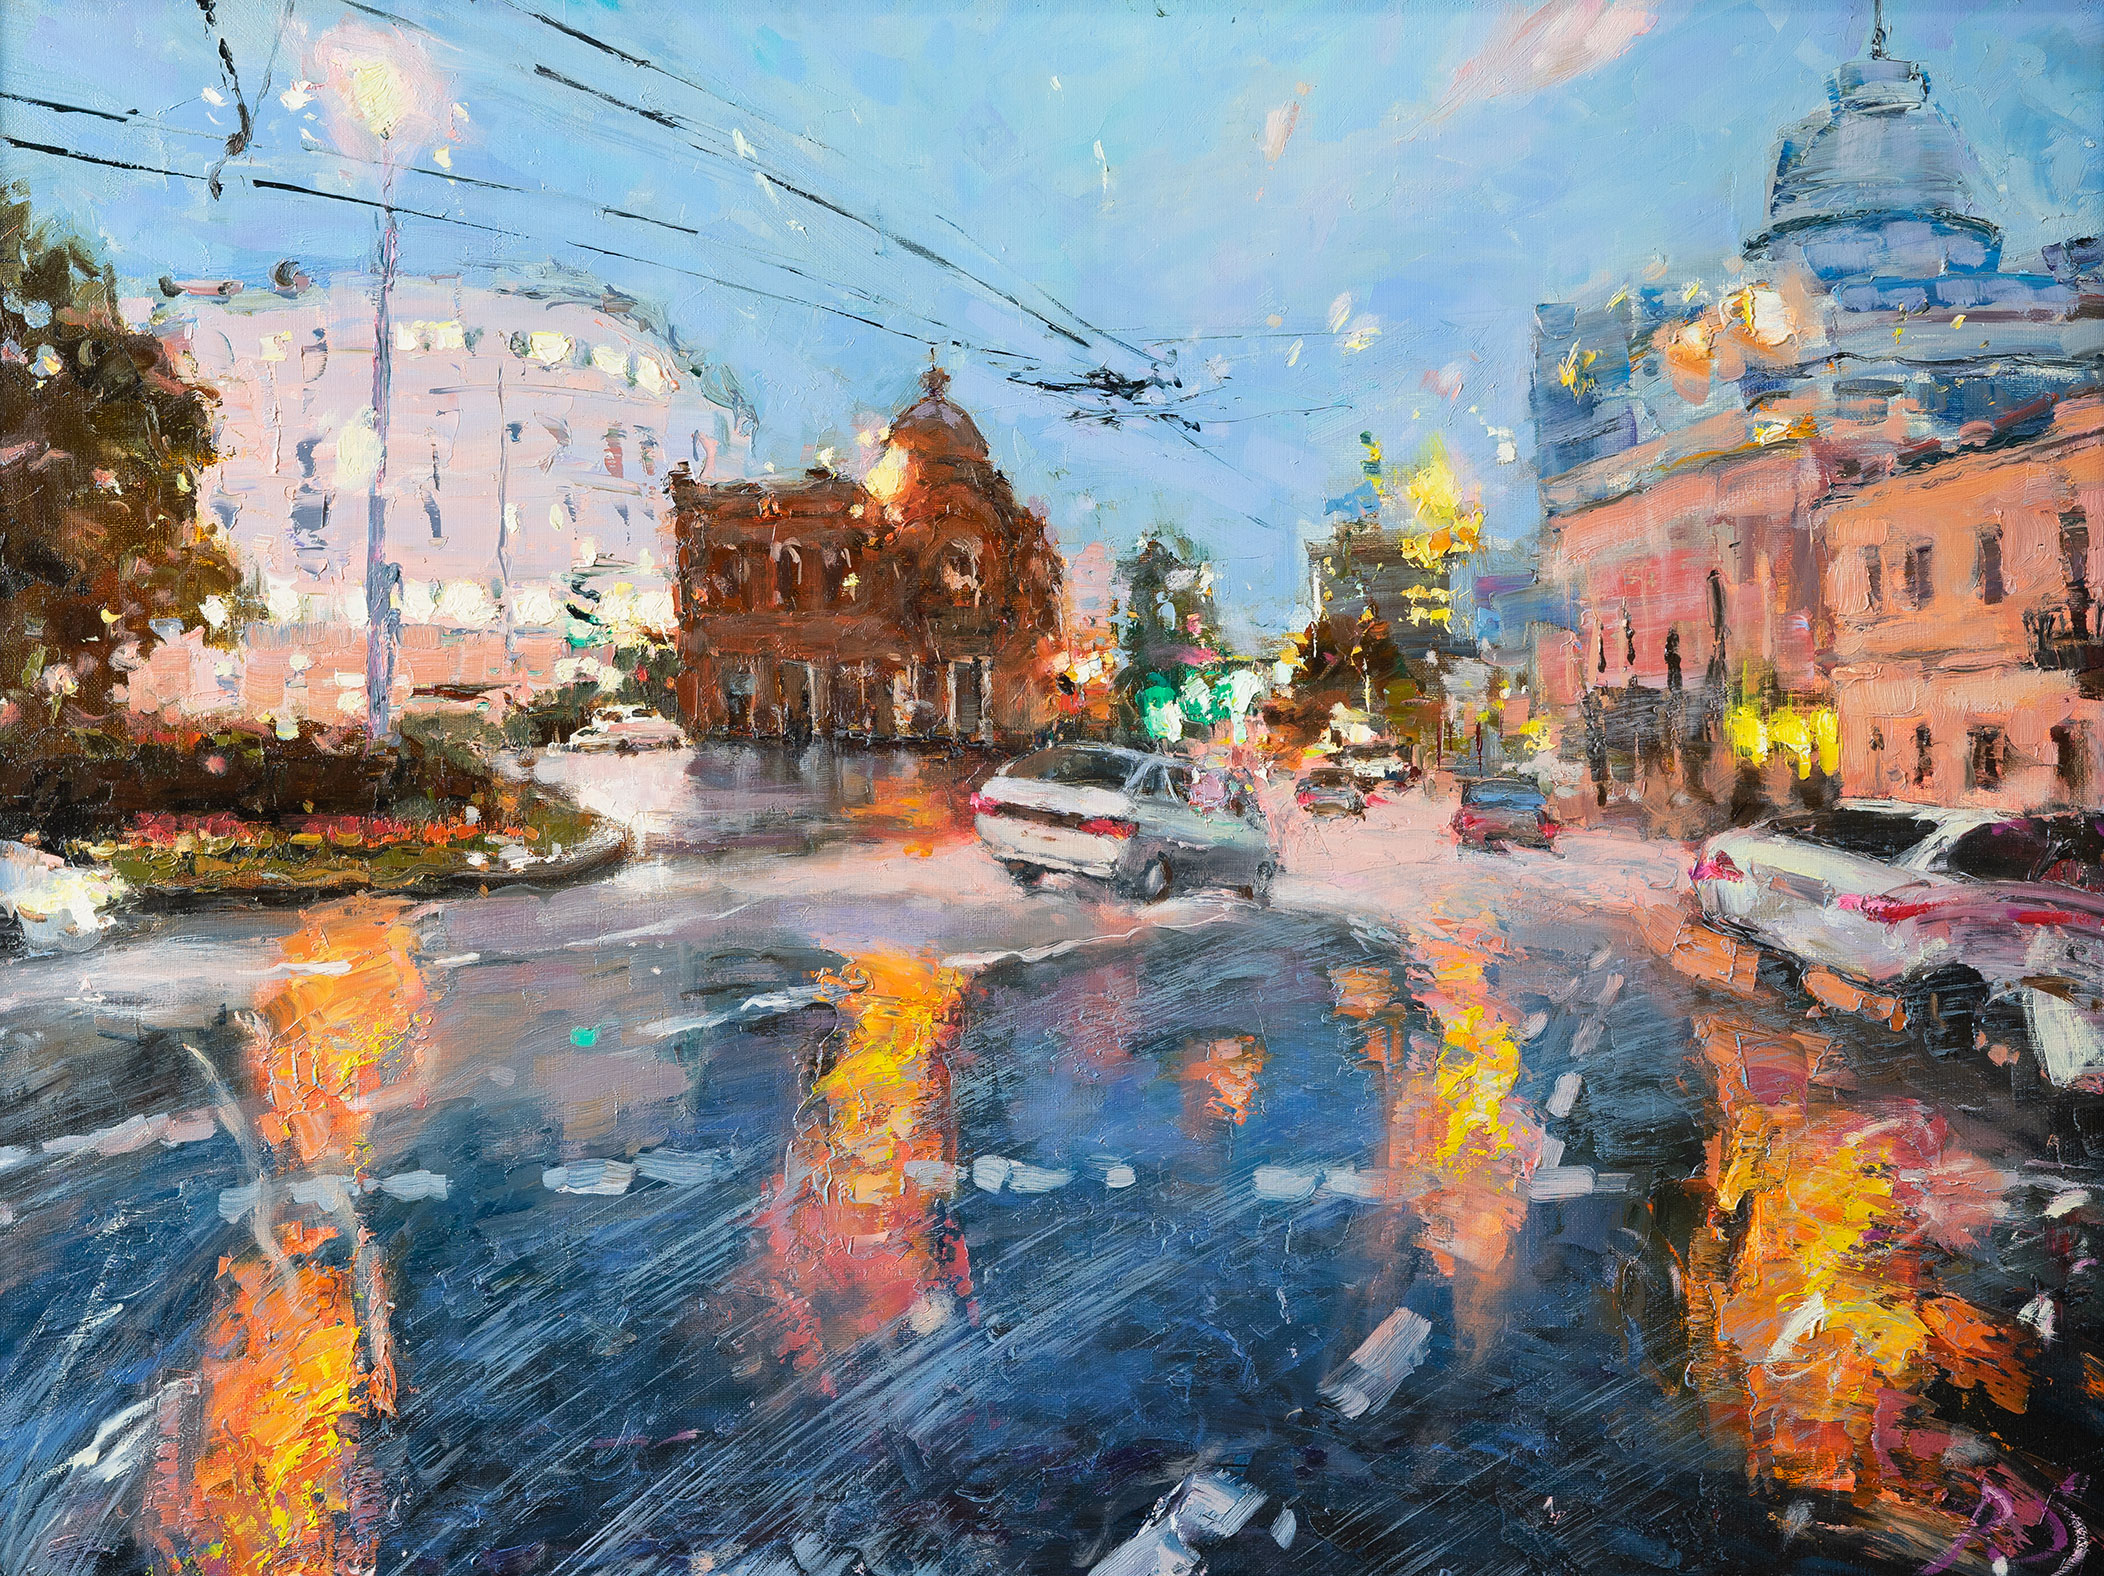 On Dry - 1, Sergei Prokhorov, Buy the painting Oil